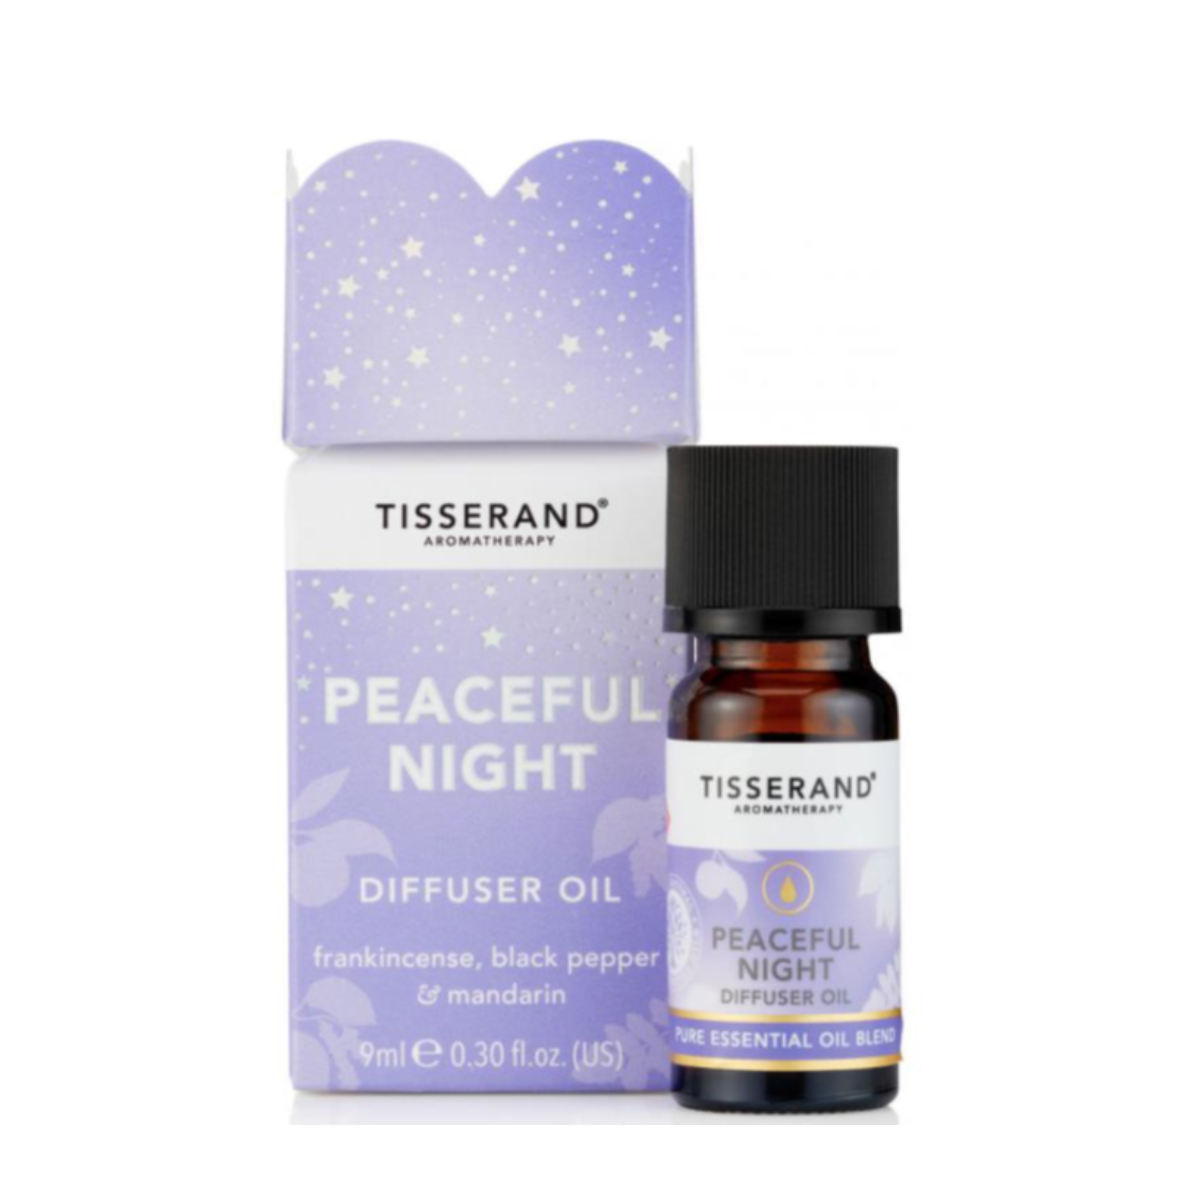 Tisserand Peaceful Night Diffuser Oil Gift Set